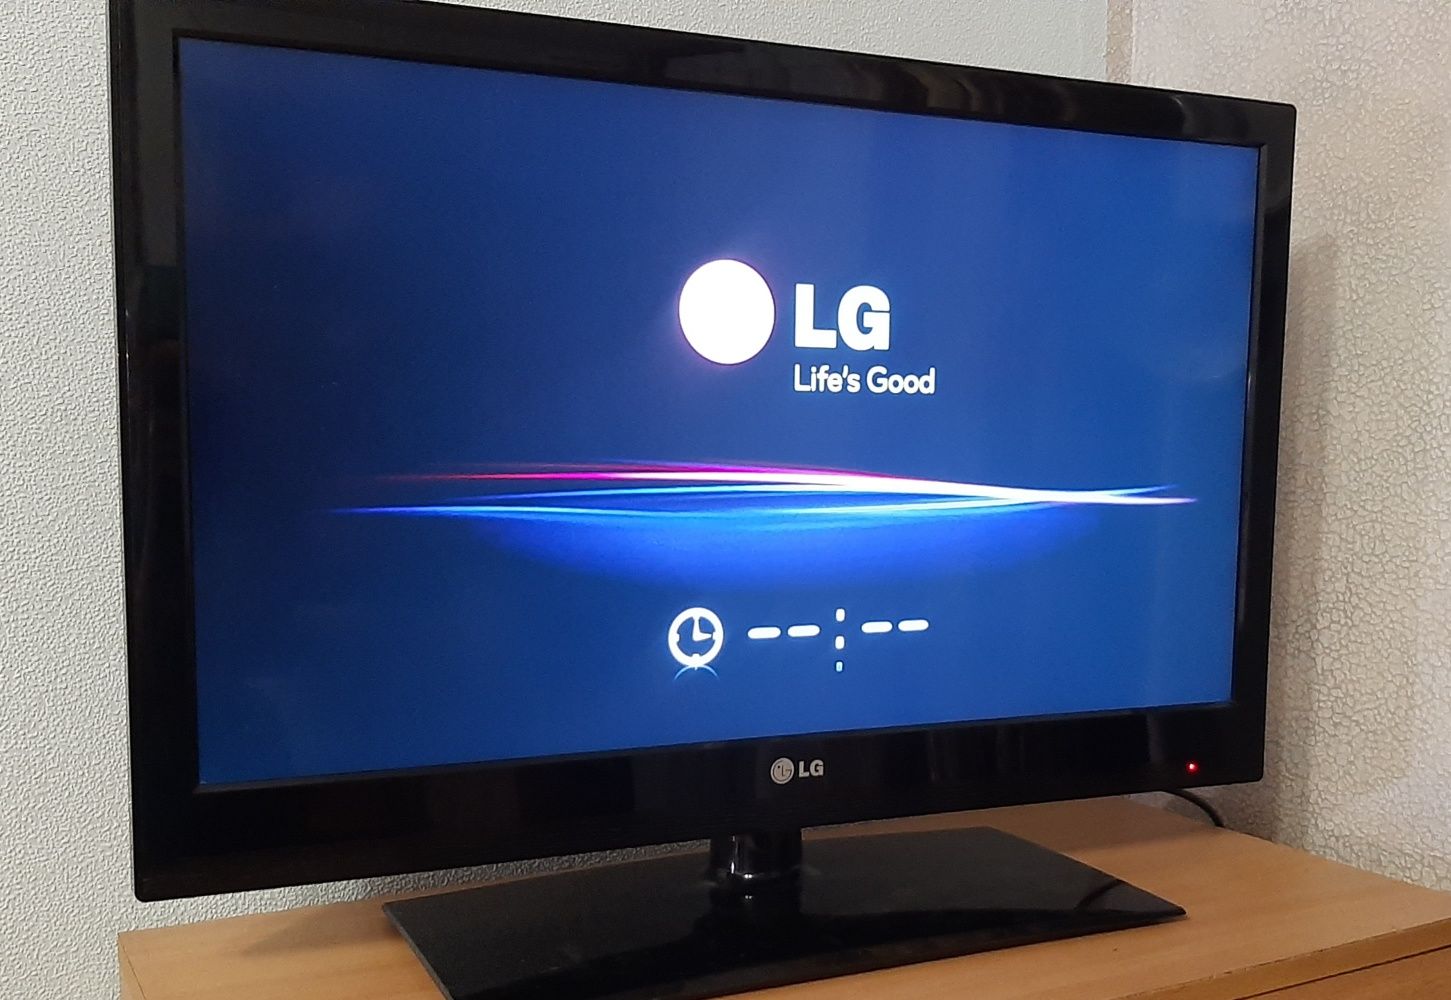 Продам телевизор LG 32LV3400 - ZA